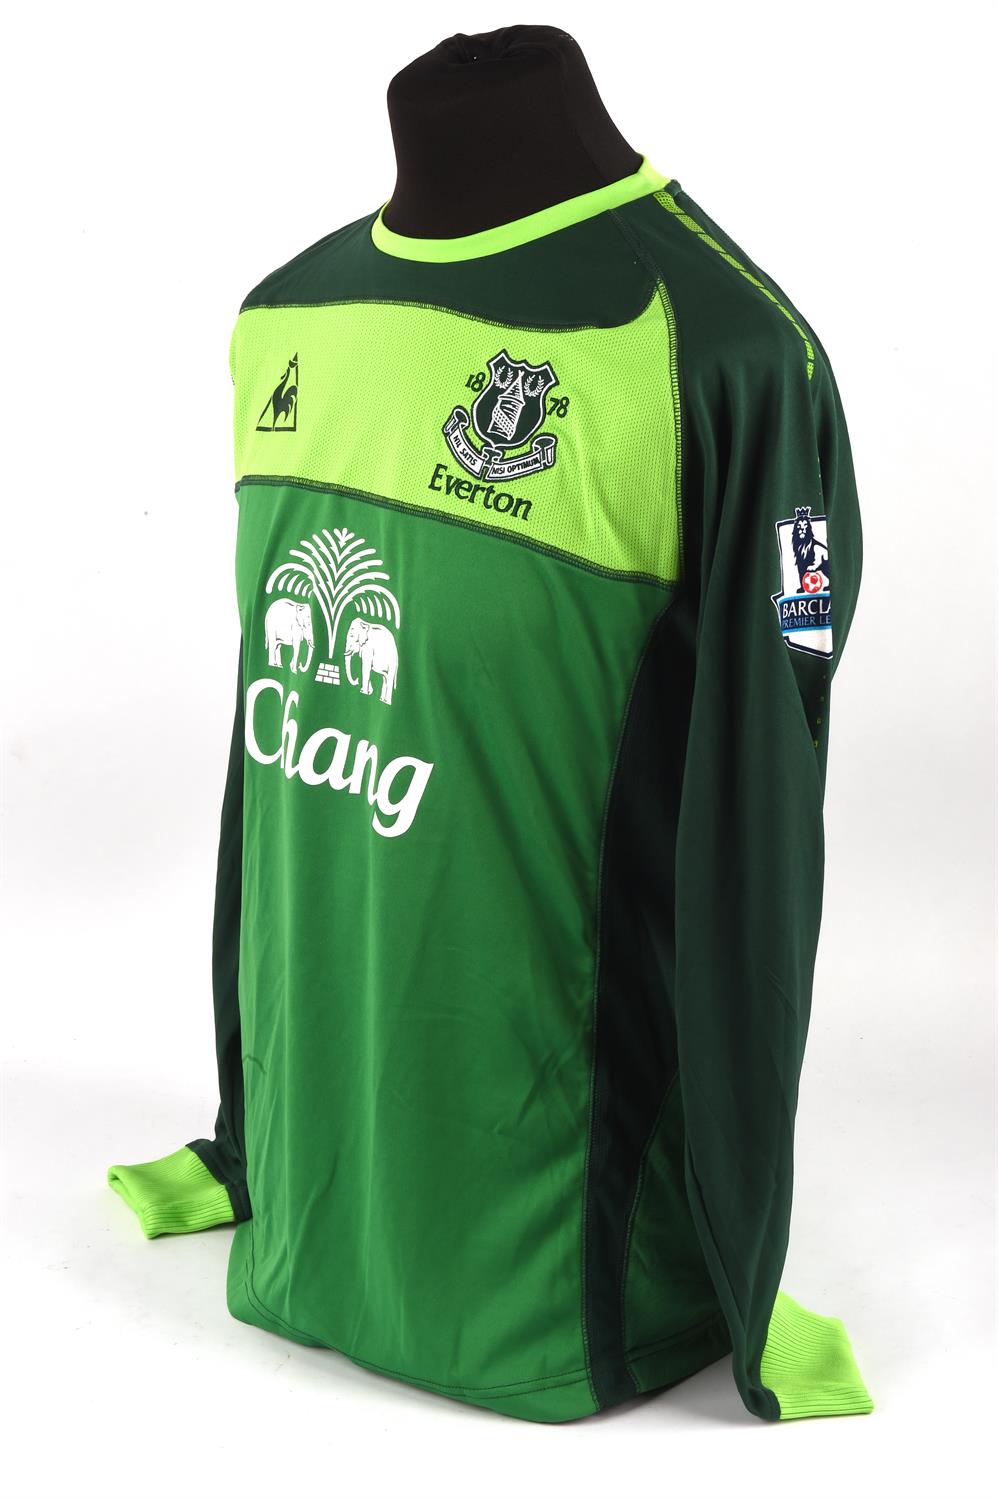 Everton Football club Jan Mucha (No.1) Premier Season shirt from 2010 - 2011, L/S. - Image 2 of 2